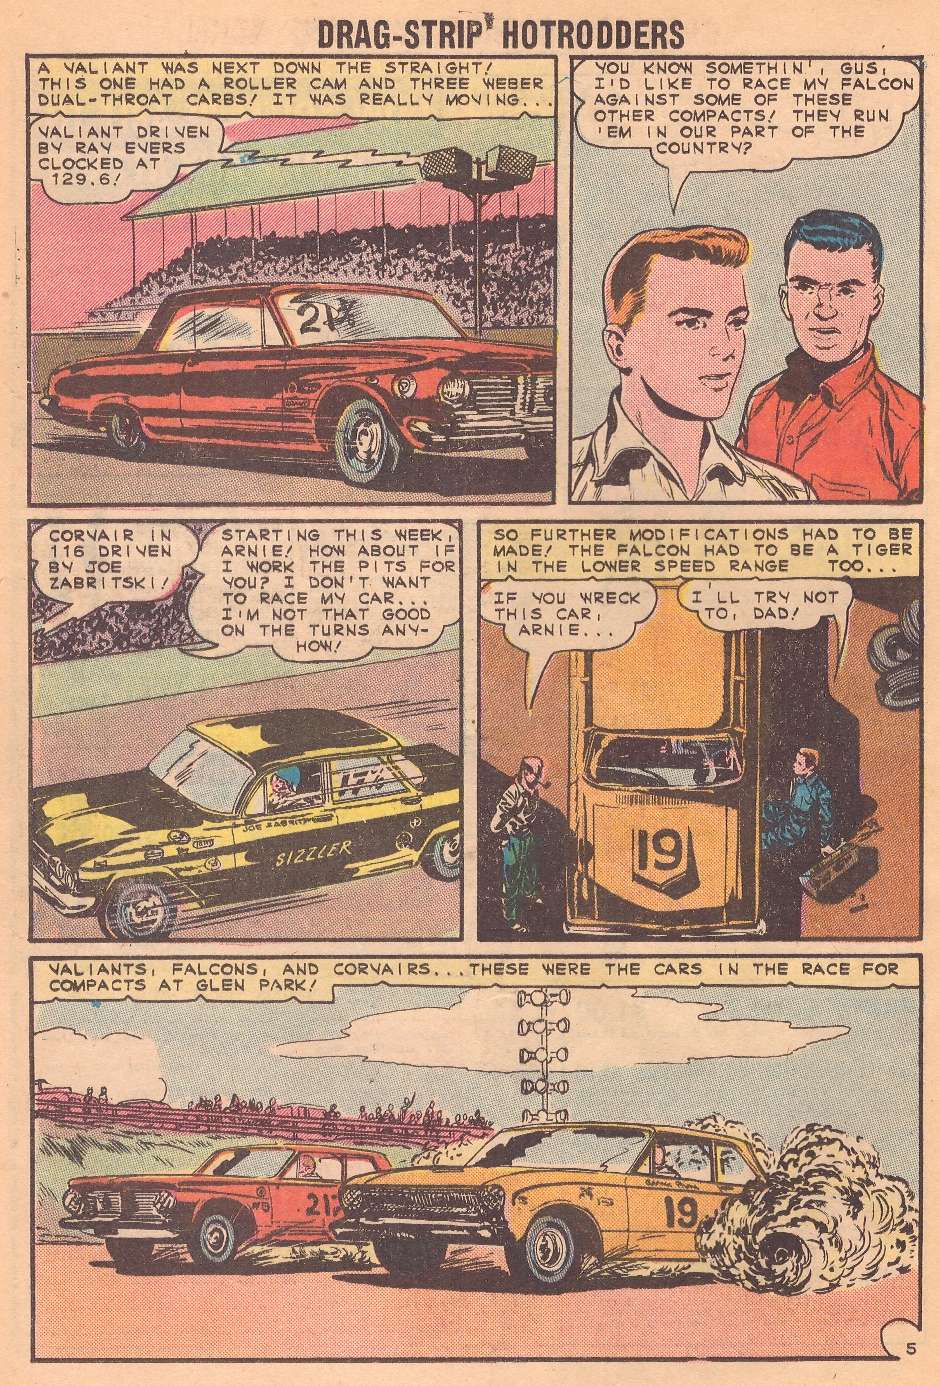 Drag-Strip Hotrodders - 60s Us Comics - January 1965 13211110